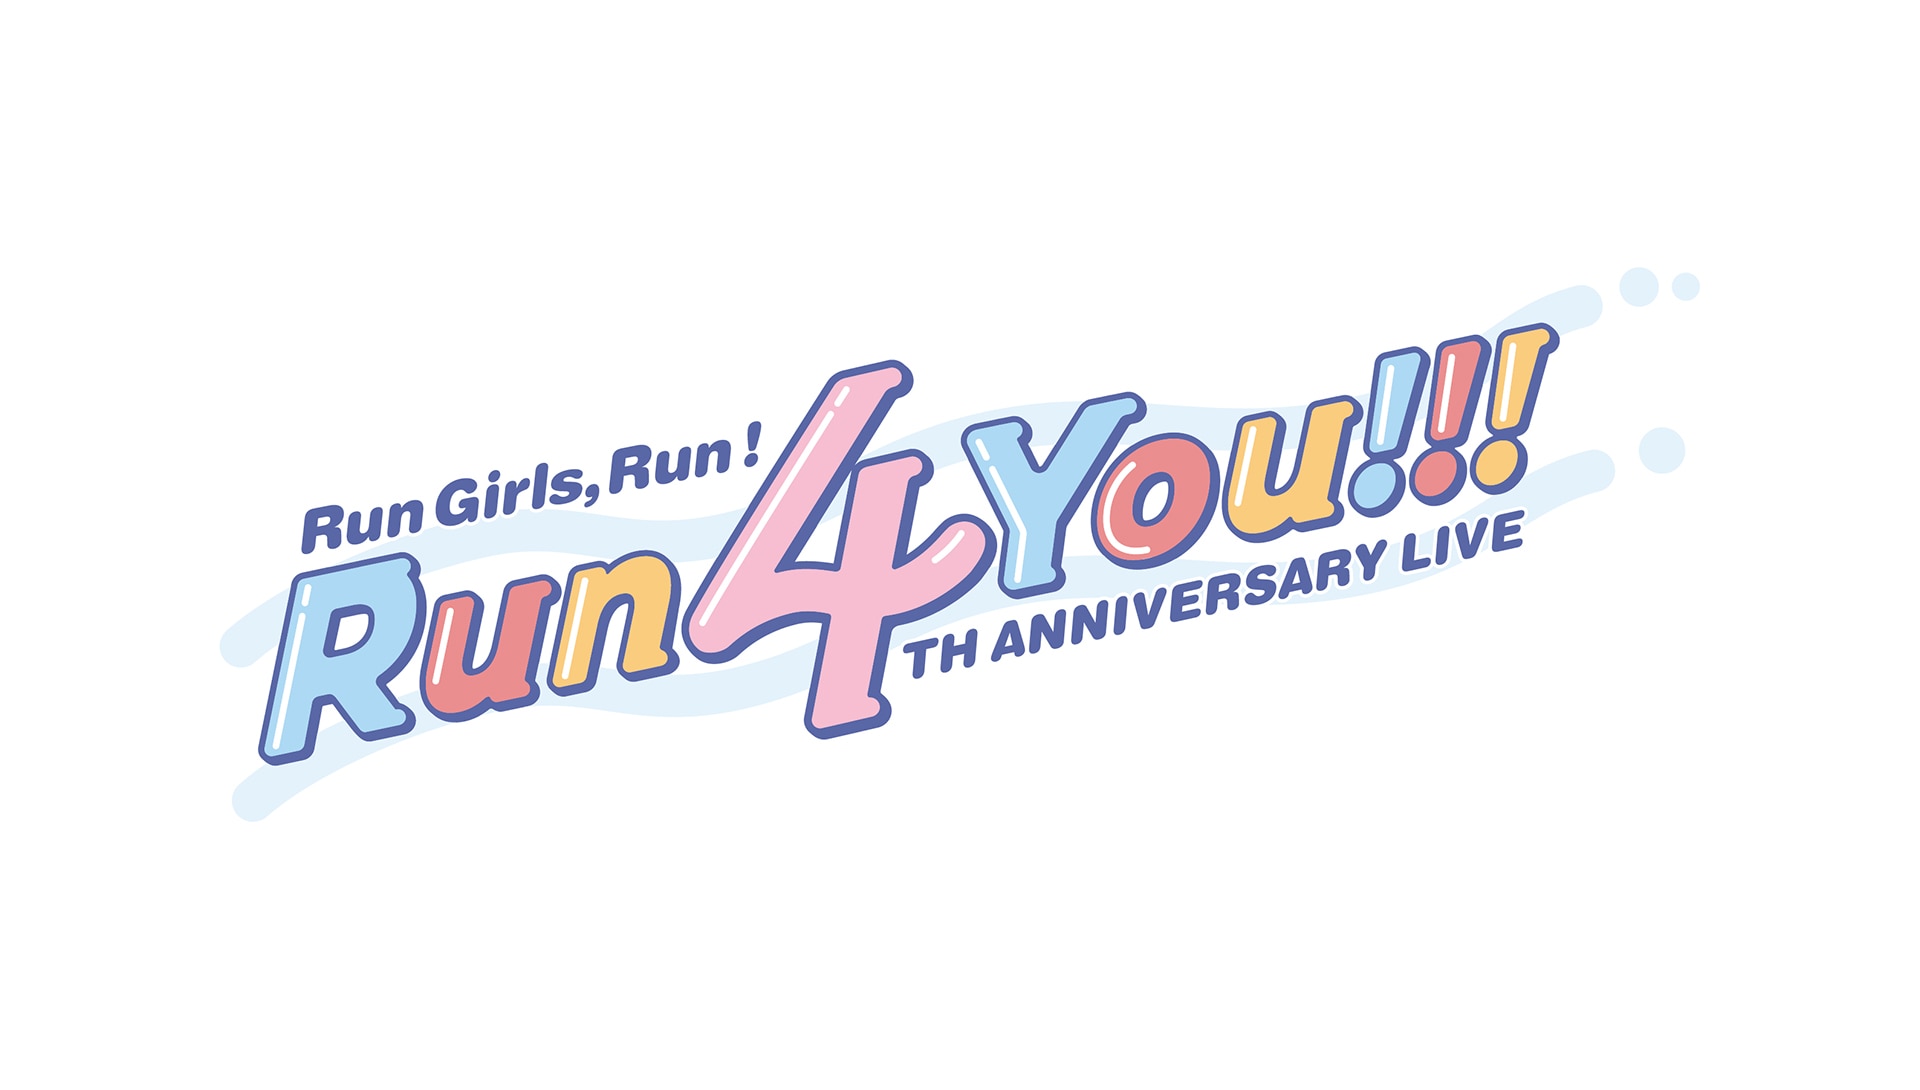 『Run Girls, Run！4th Anniversary LIVE Run 4 You!!!』振替公演のご案内<br />
